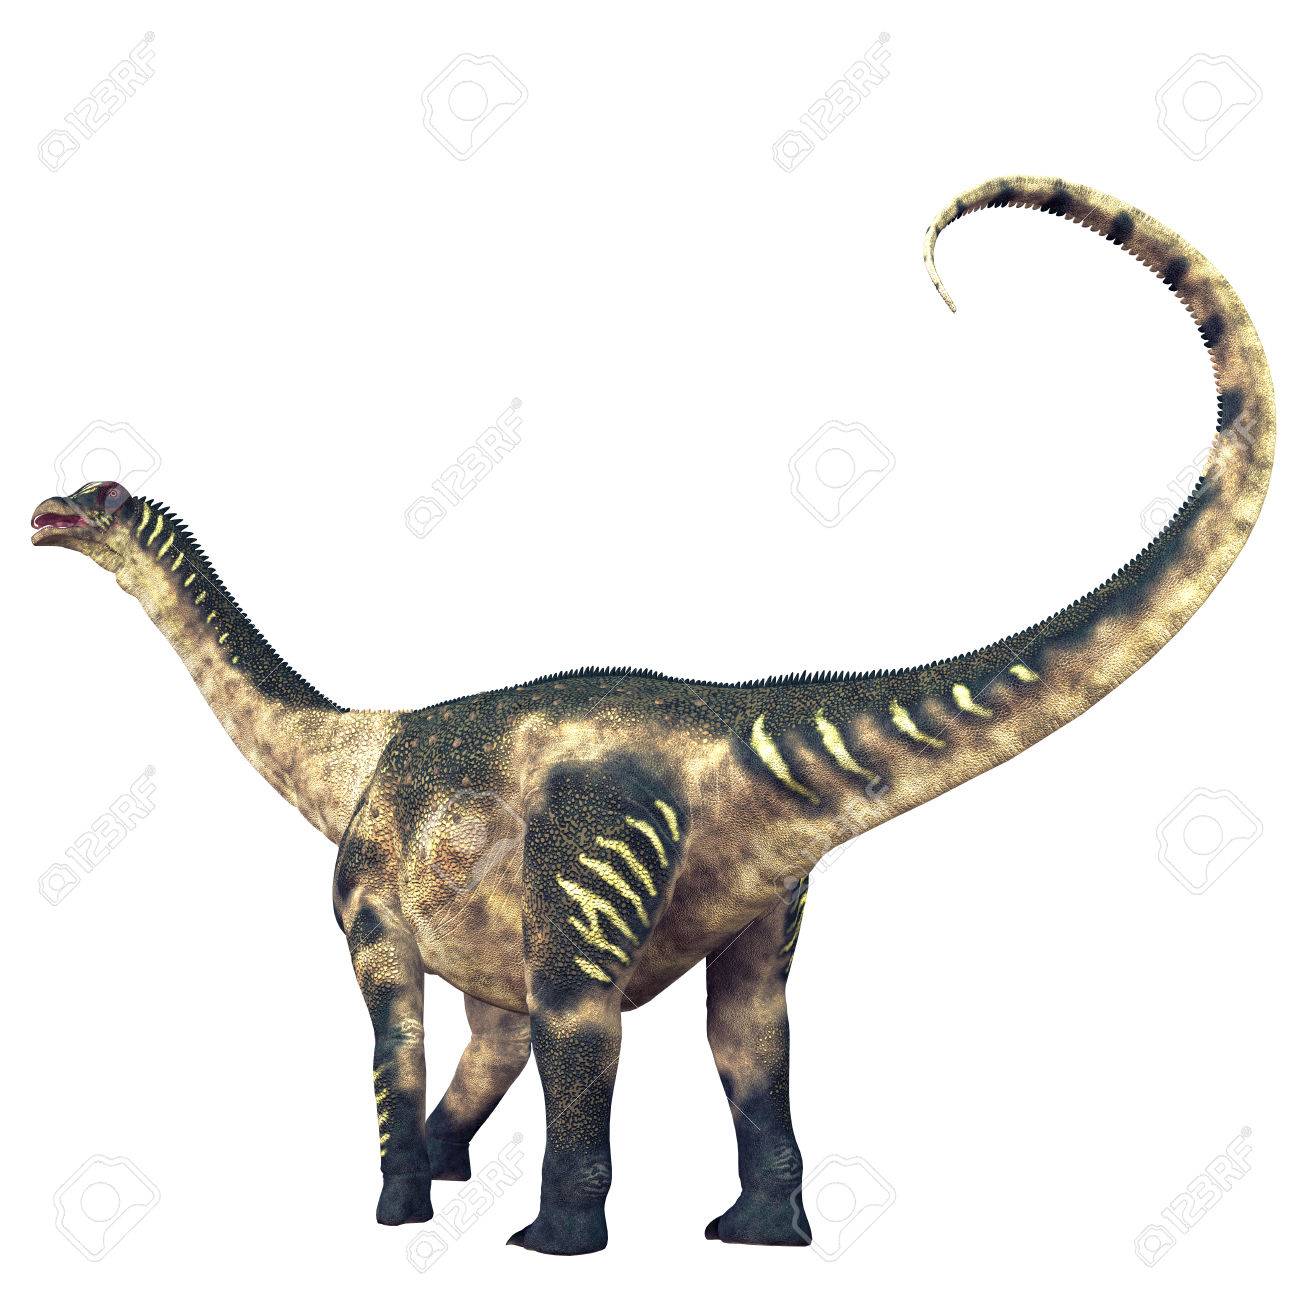 39845893-antarctosaurus-dinosaur-tail-antarctosaurus-was-a-titanosaur-sauropod-that-lived-in-s...jpg